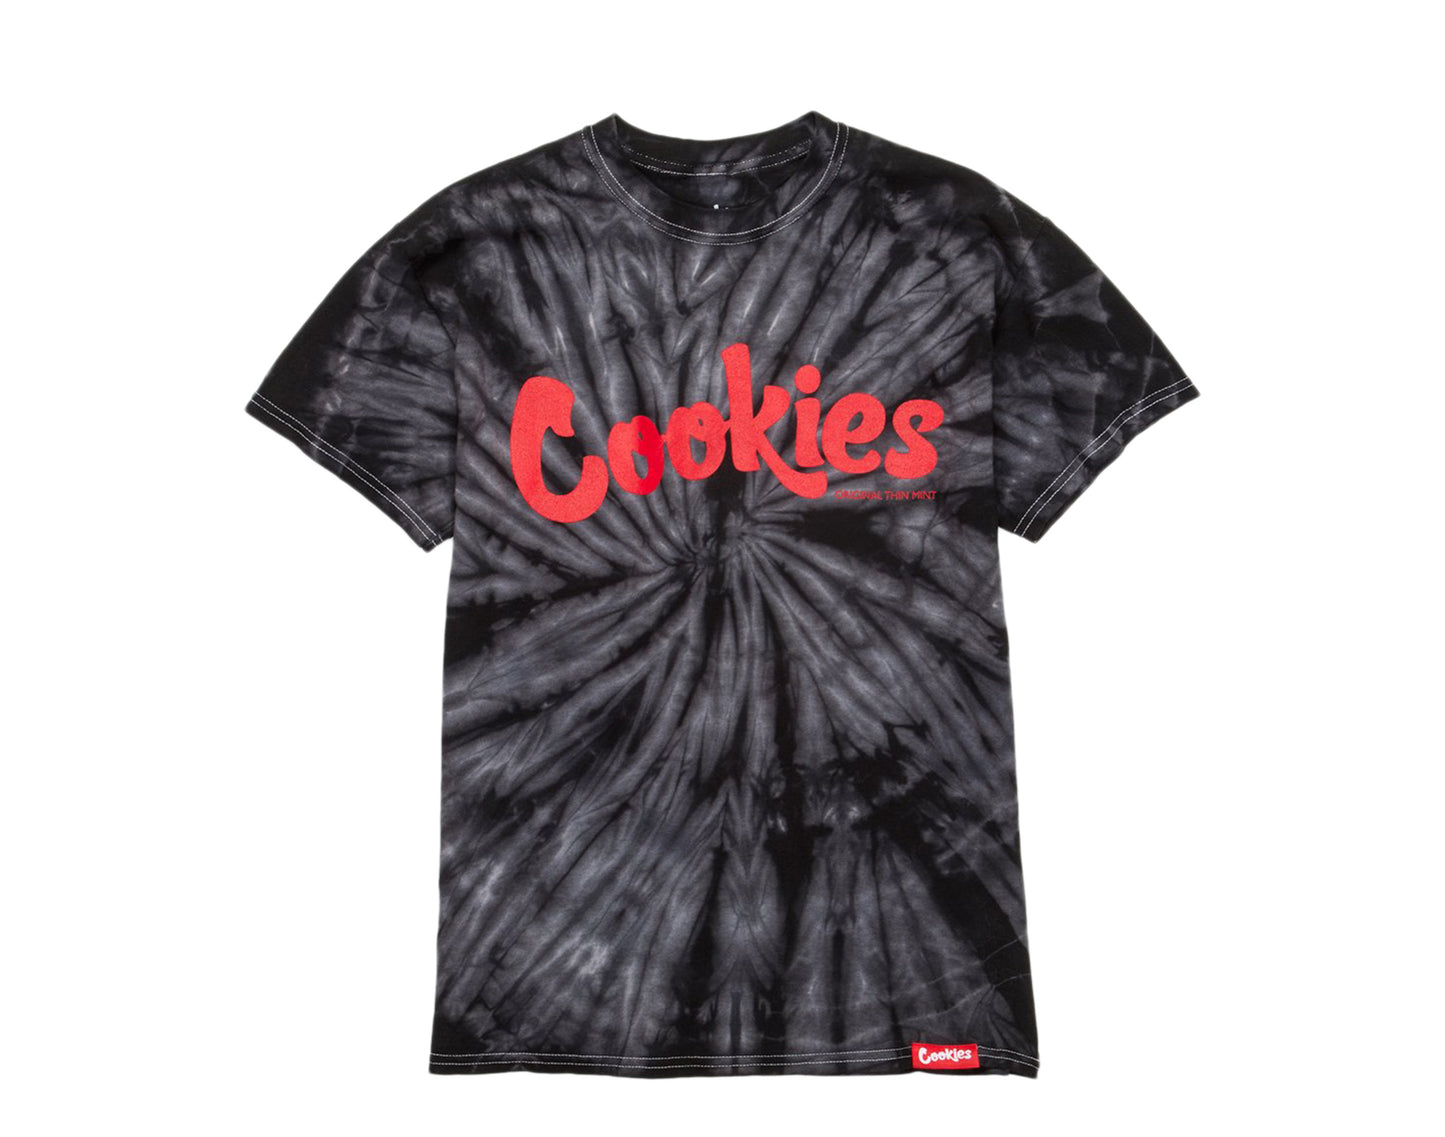 Cookies Original Logo Thin Mint Spider Tie Dye Black Men's Tee Shirt 1536T3317